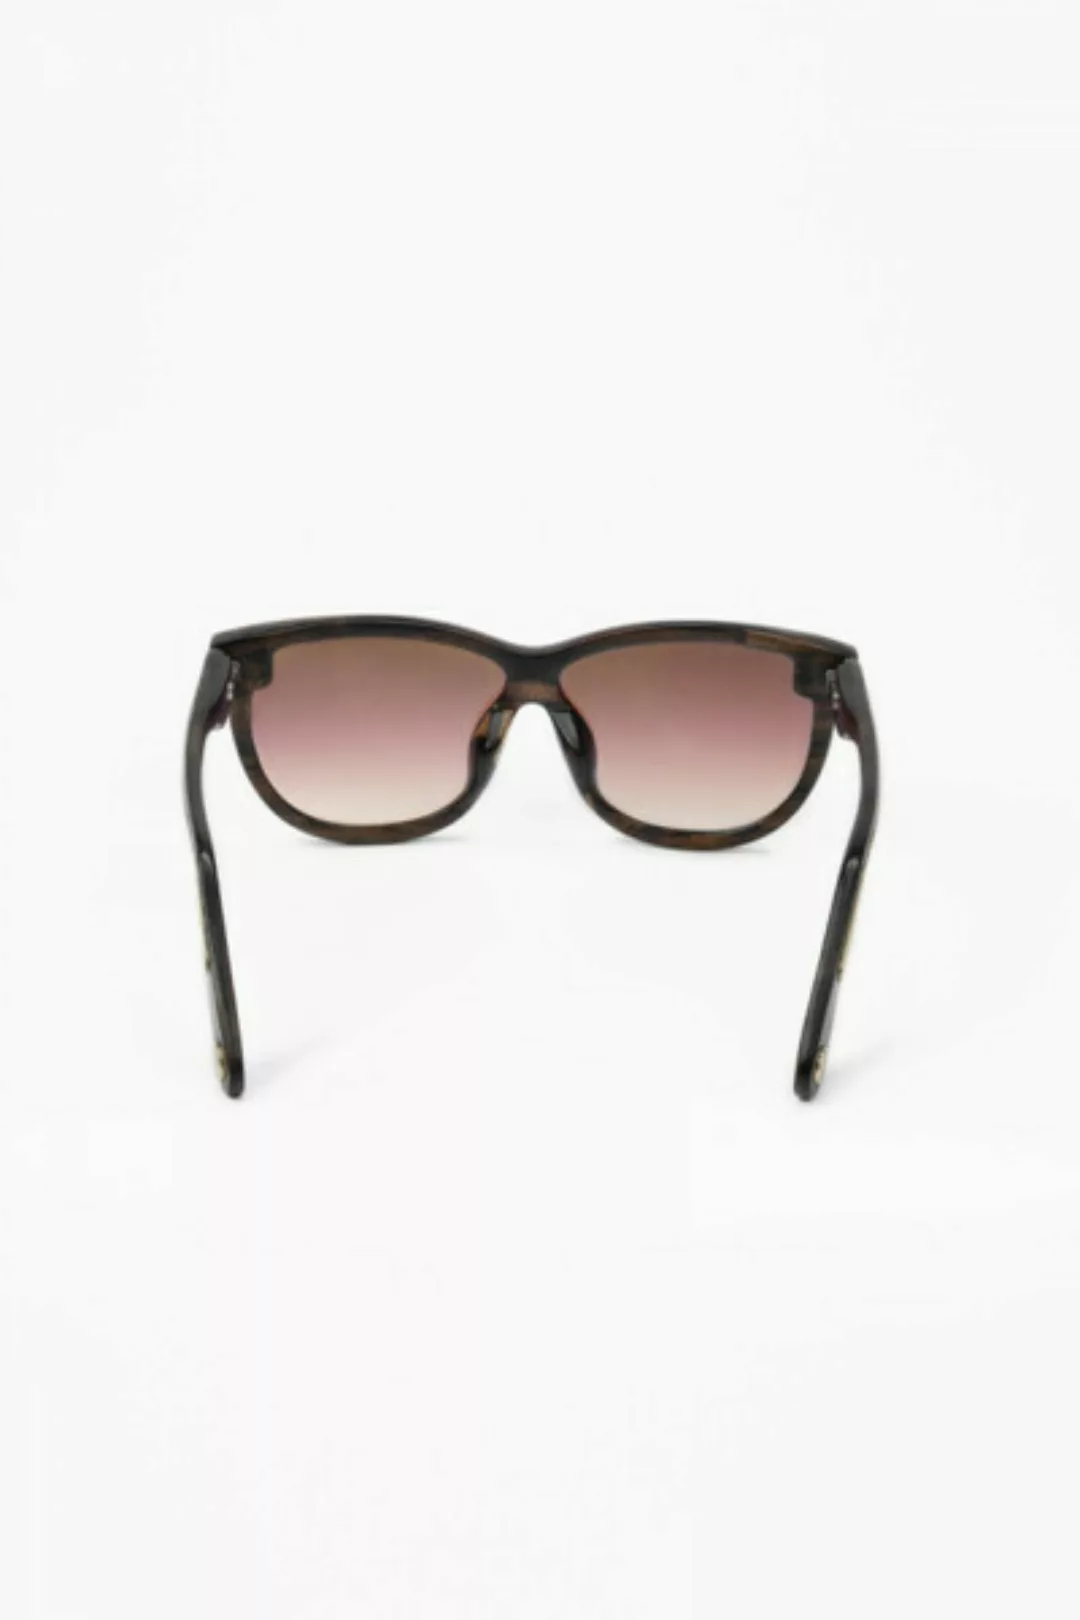 Torquay Ytqy - Wayfarer Sunglasses günstig online kaufen